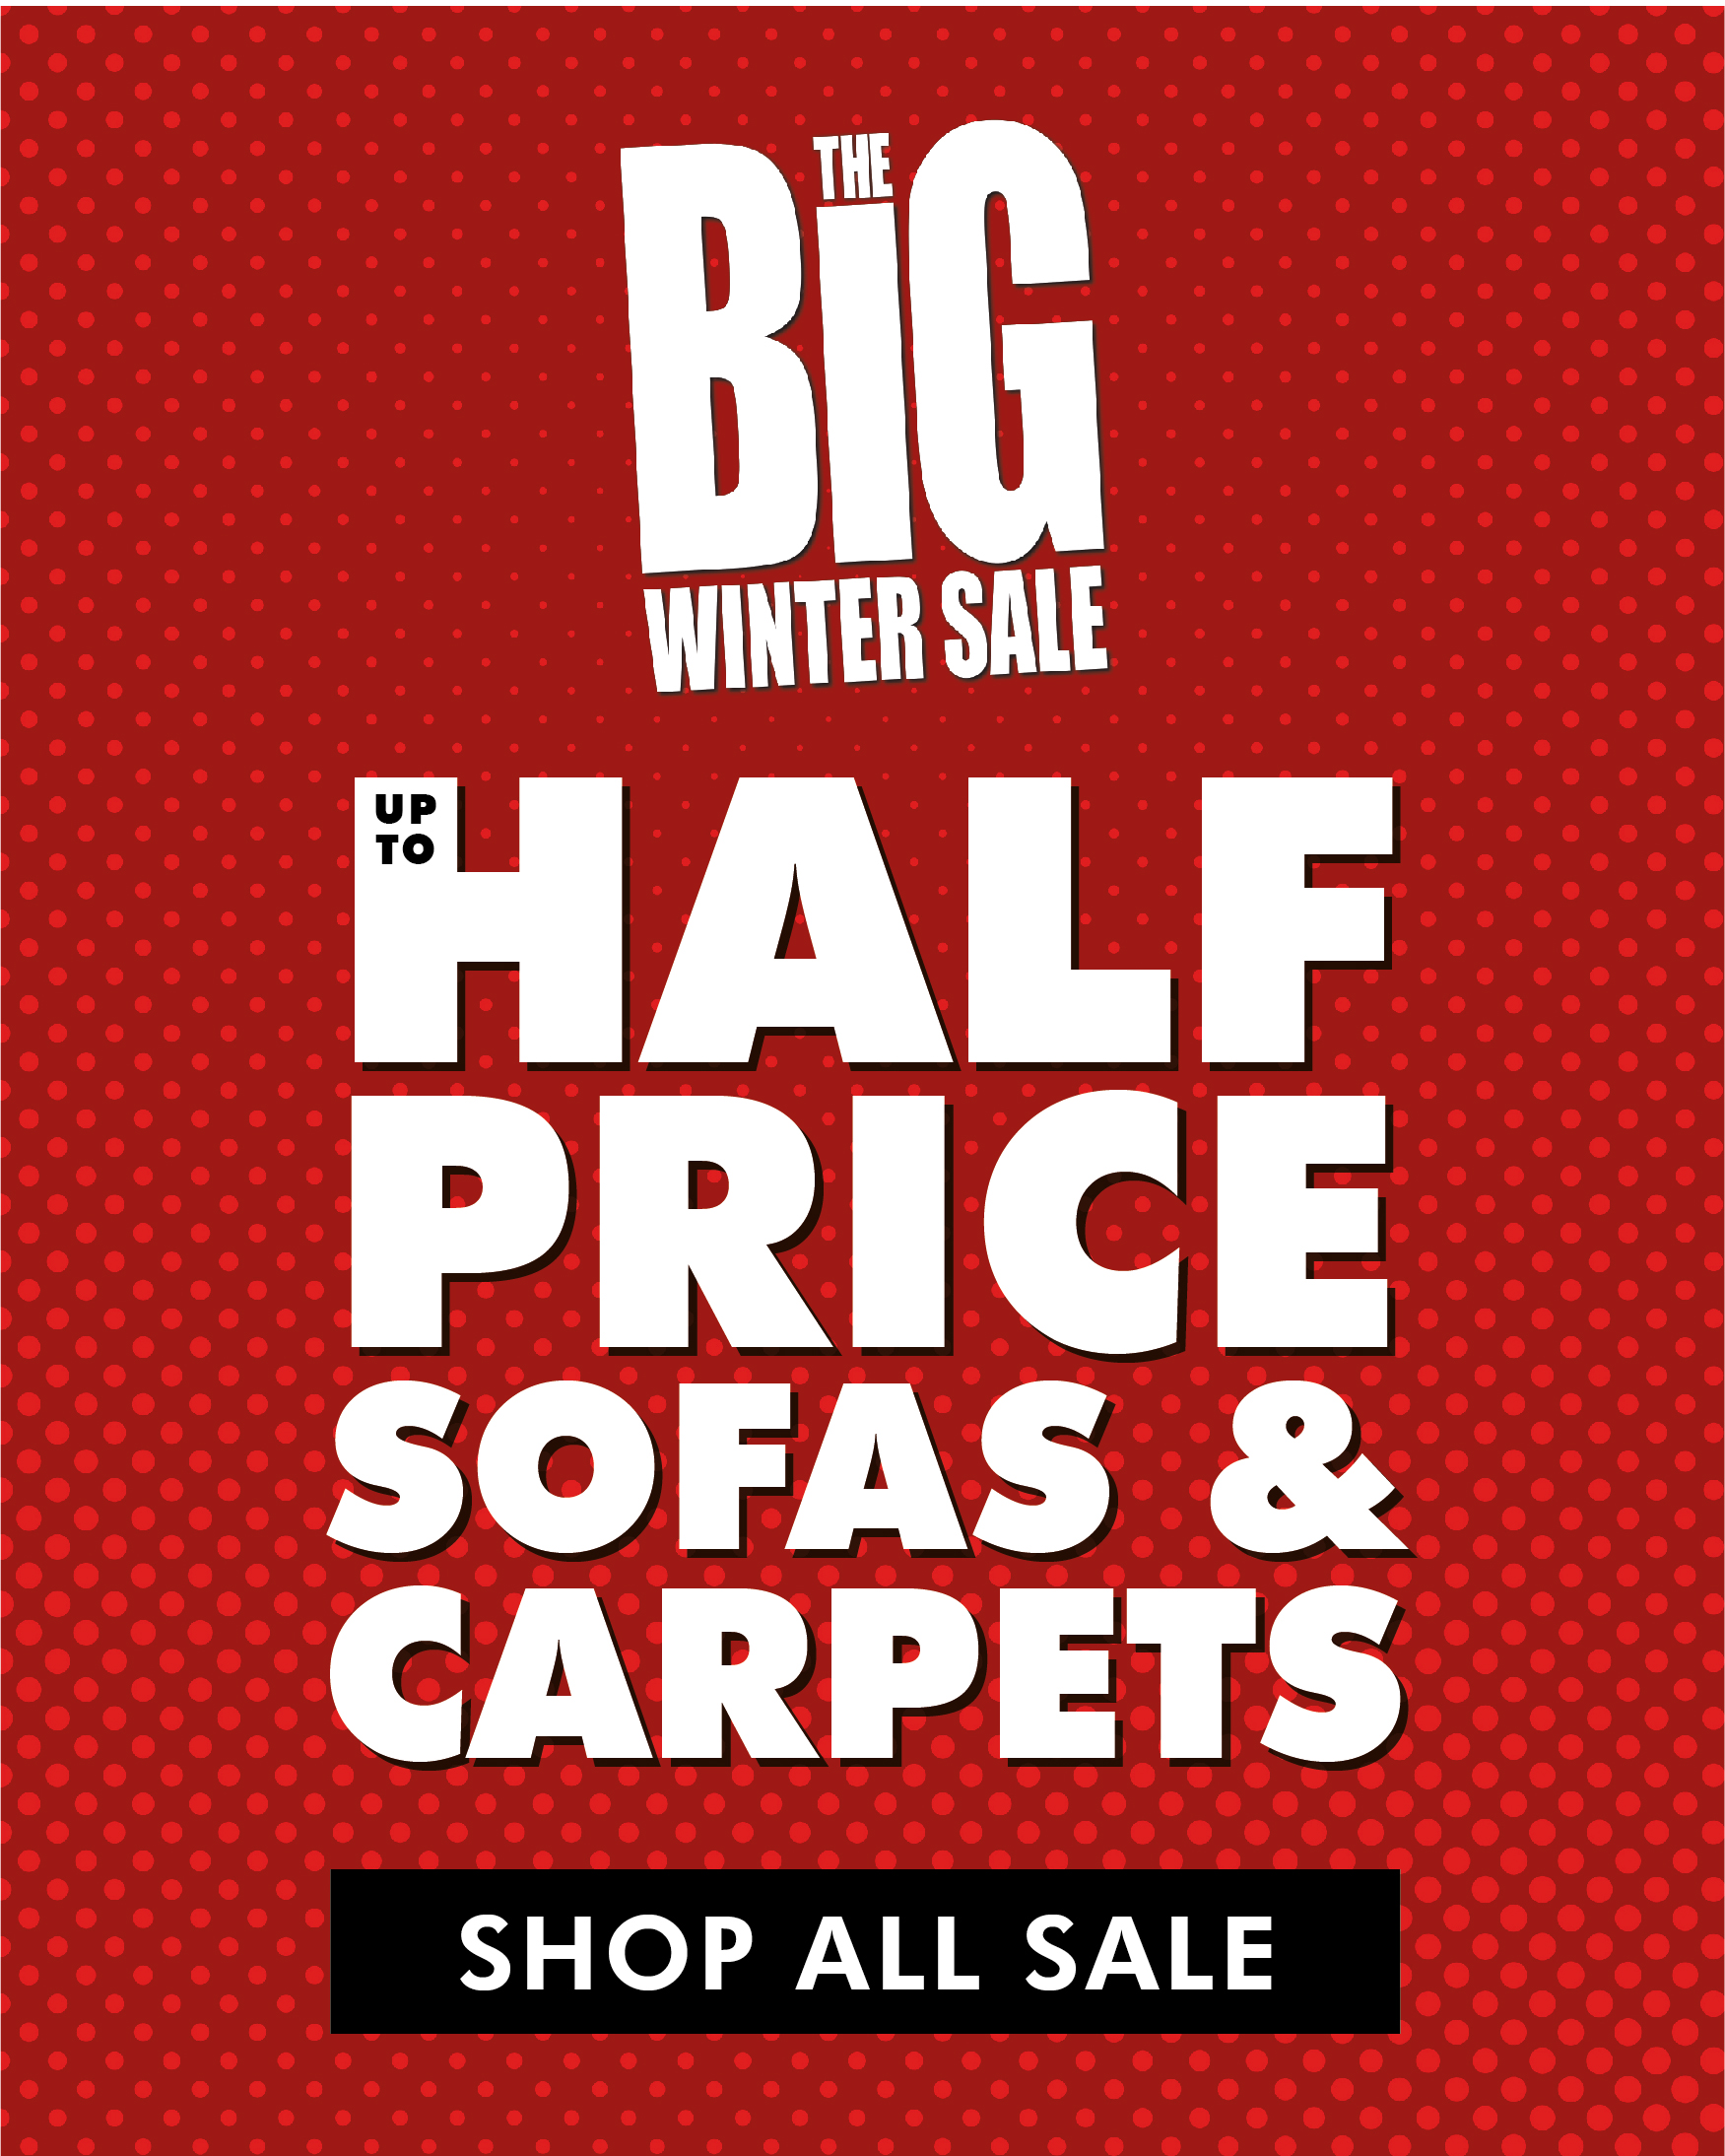 Big Winter Sale - Up to half price sofas and carpets